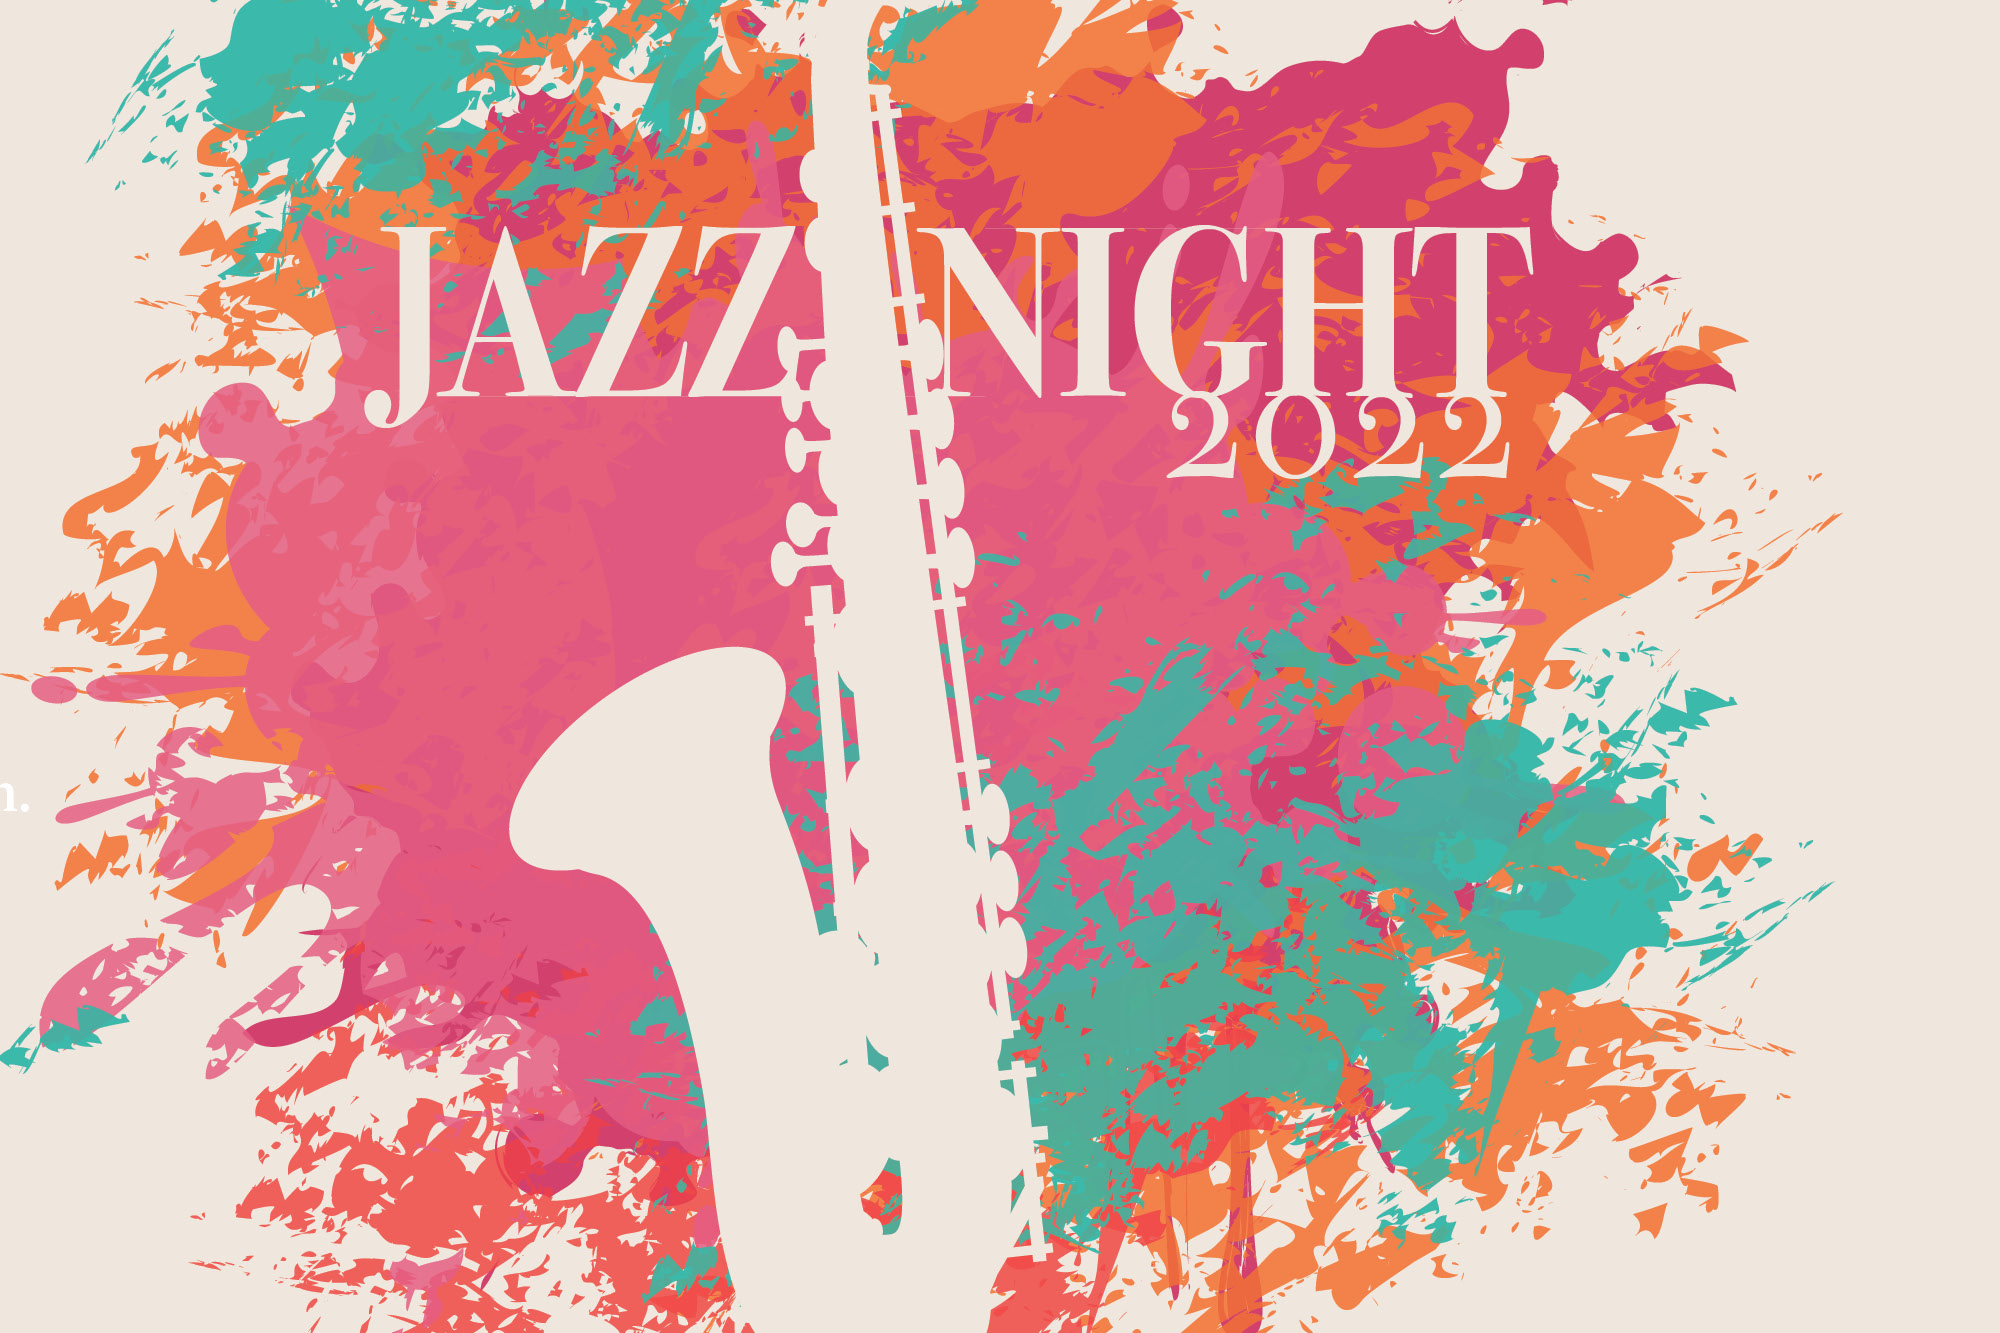 Image for 2022 Jazz Night.